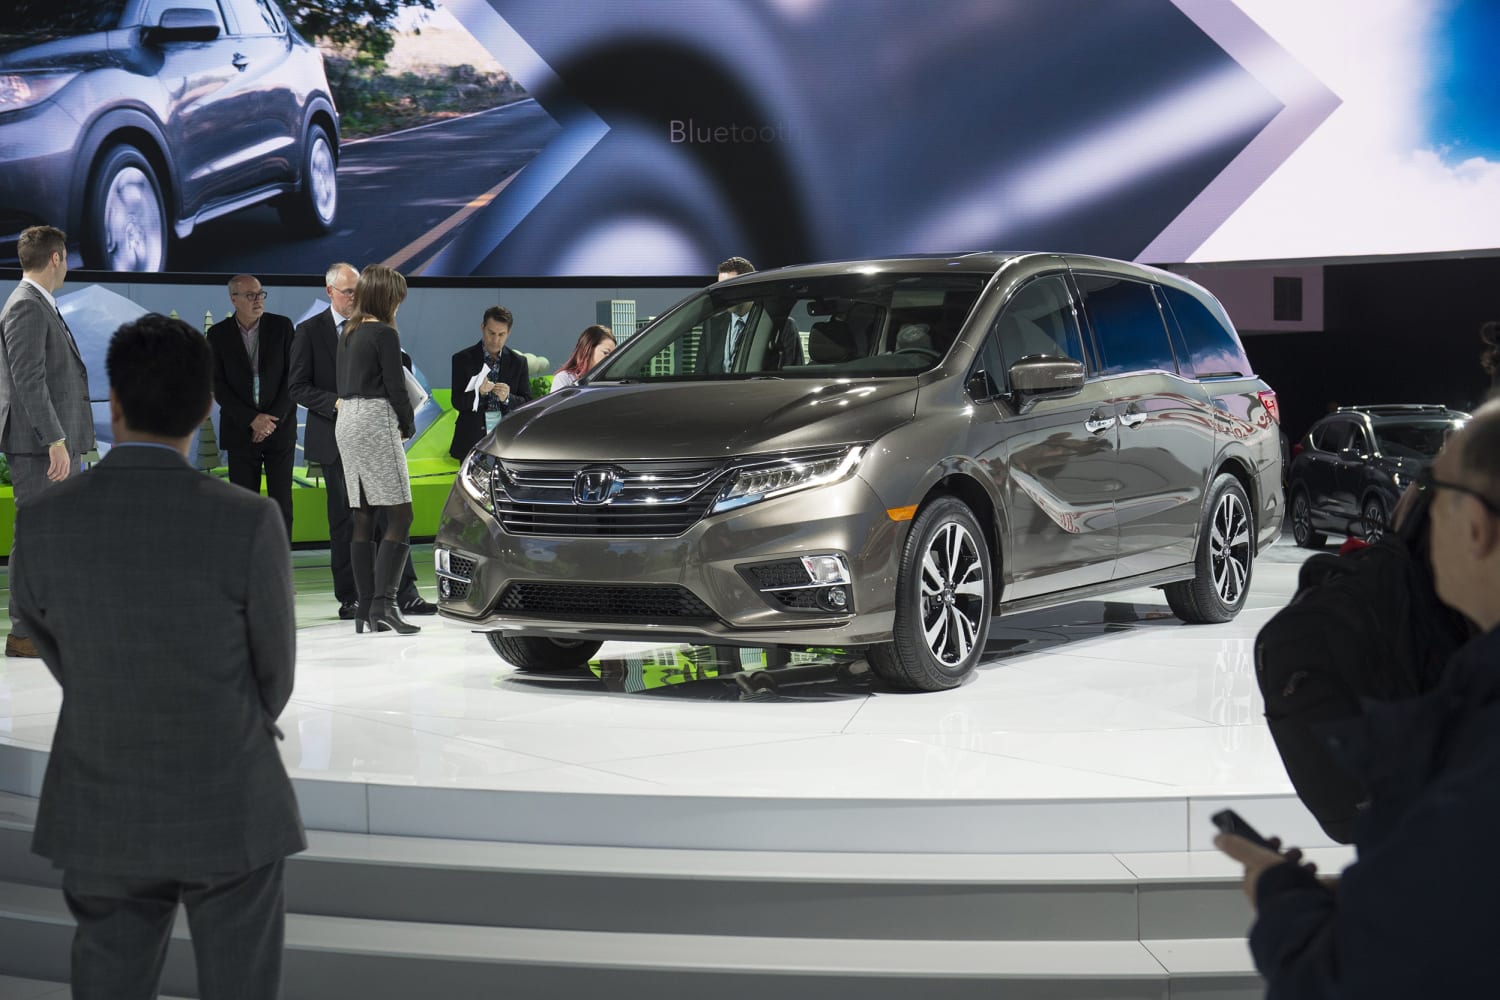 Honda recalls 1.2 million U.S. vehicles for rear camera issue